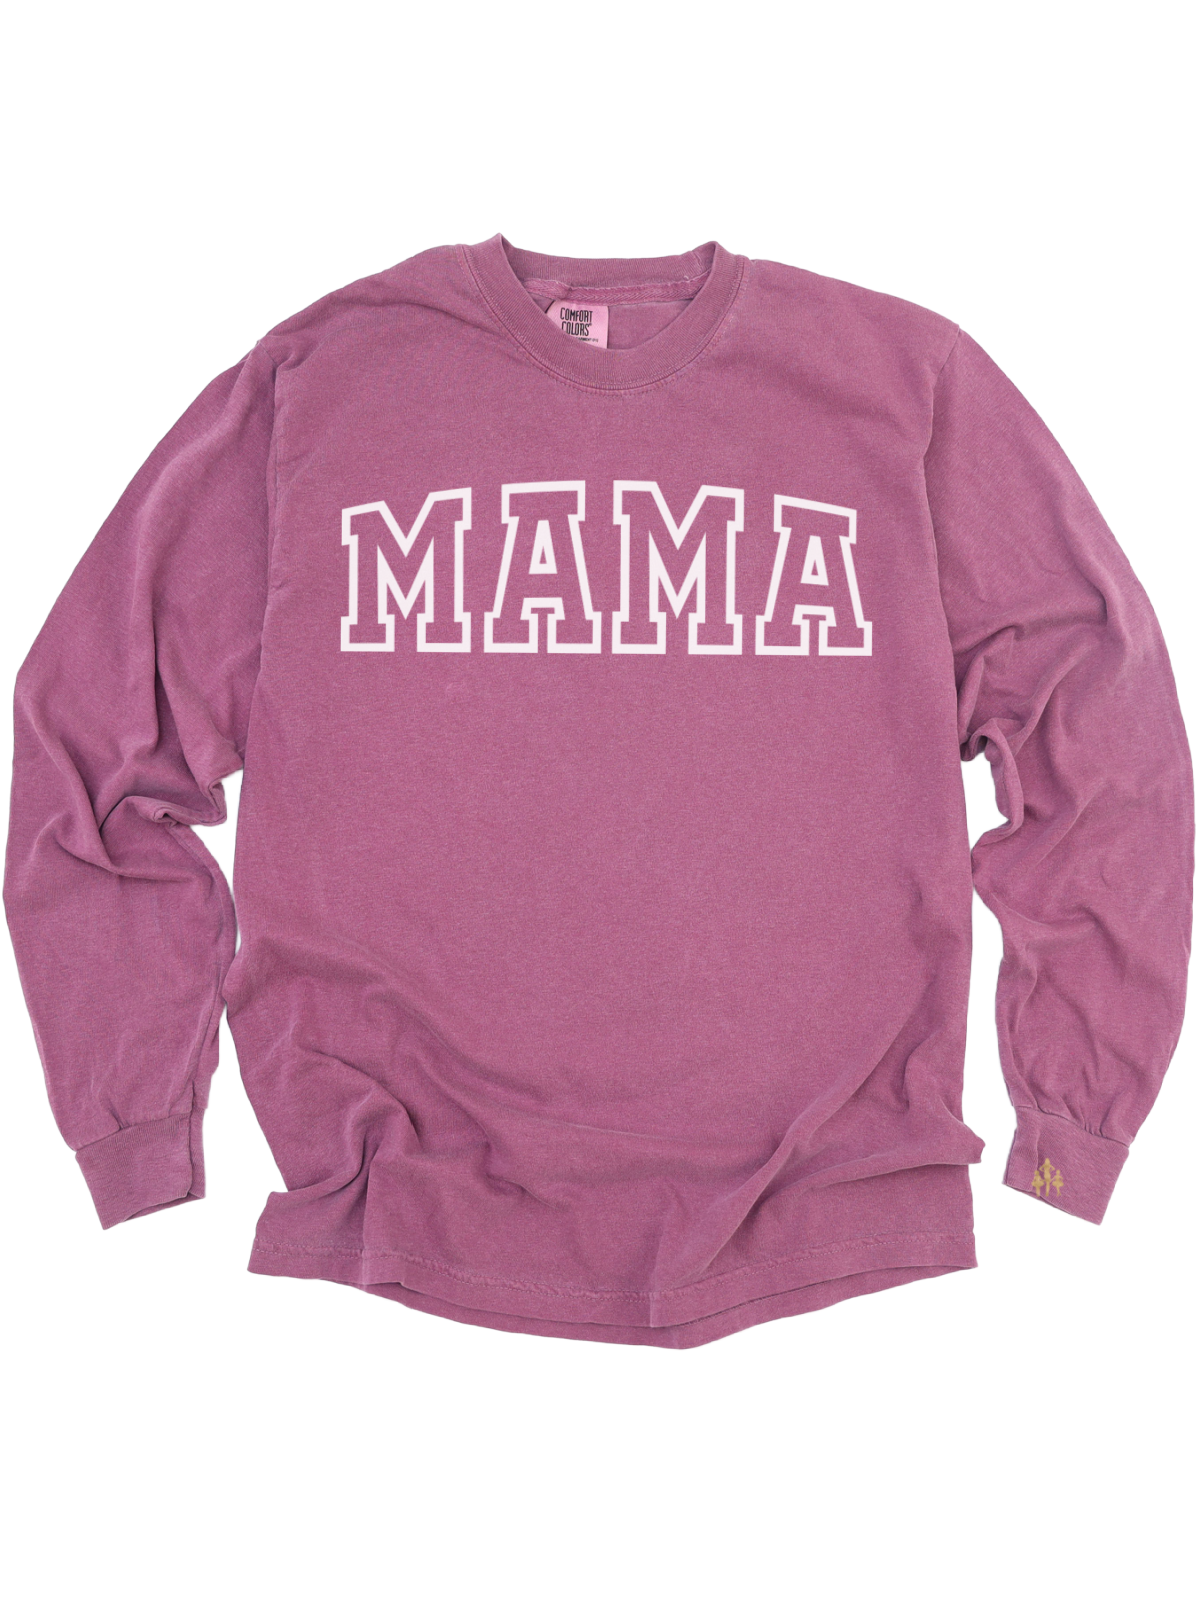 MAMA Varsity Long Sleeve Berry Pink Shirt